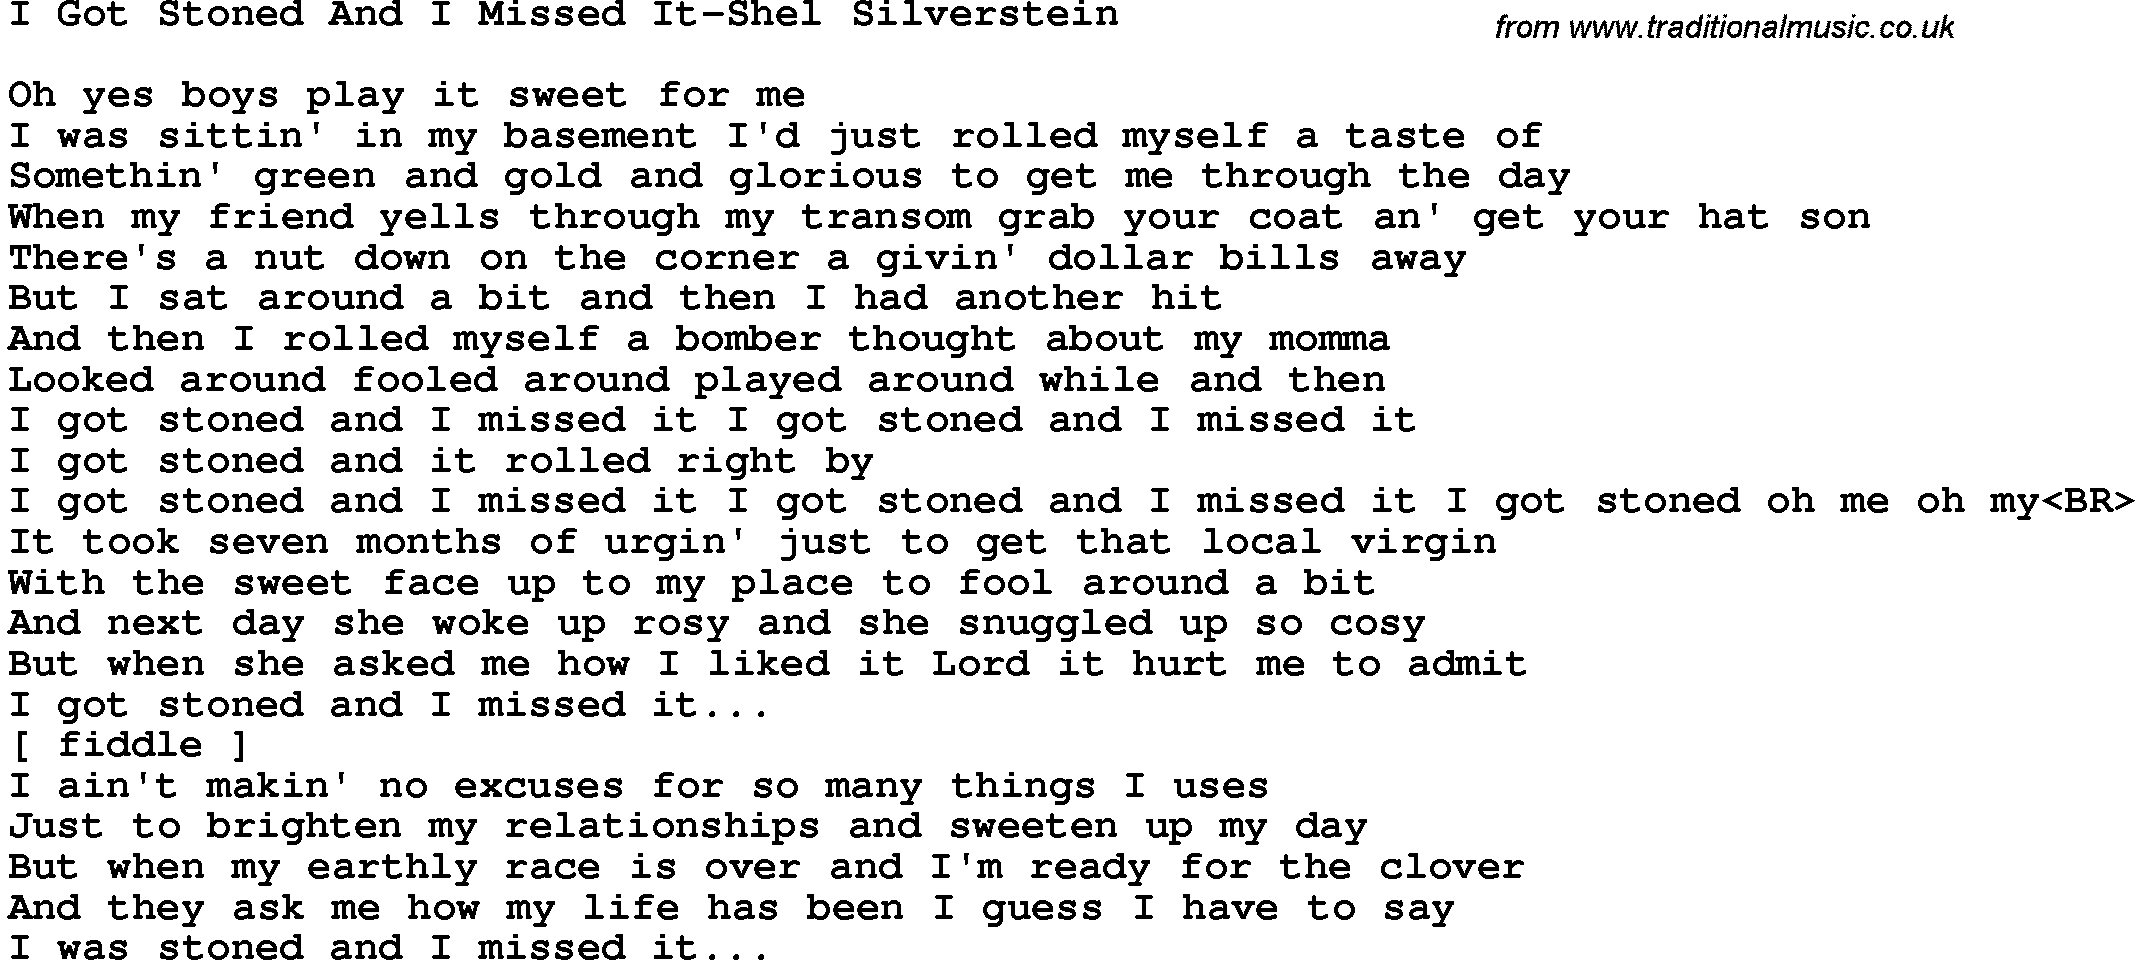 Novelty song: I Got Stoned And I Missed It-Shel Silverstein lyrics